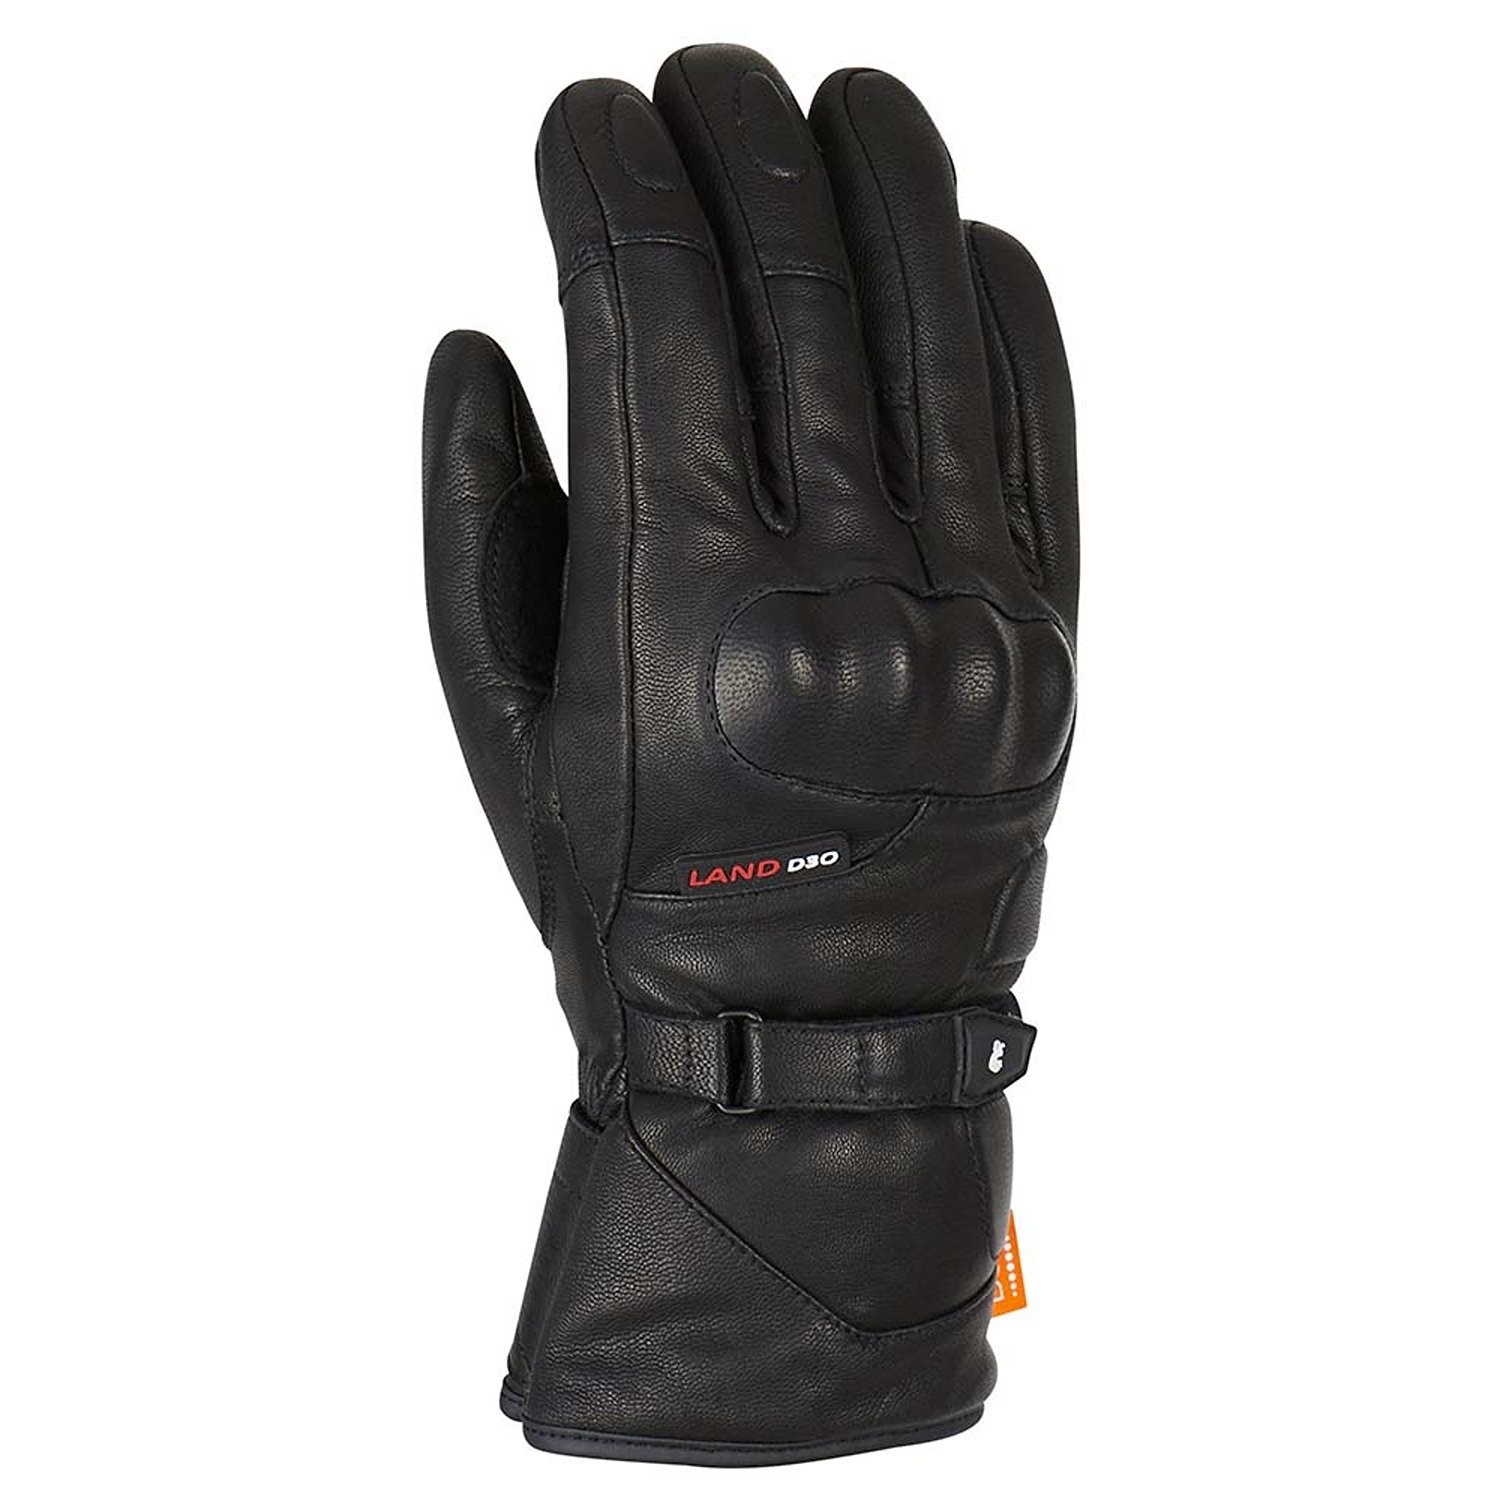 Image of Furygan Land DK D30 Gloves Black Größe 2XL